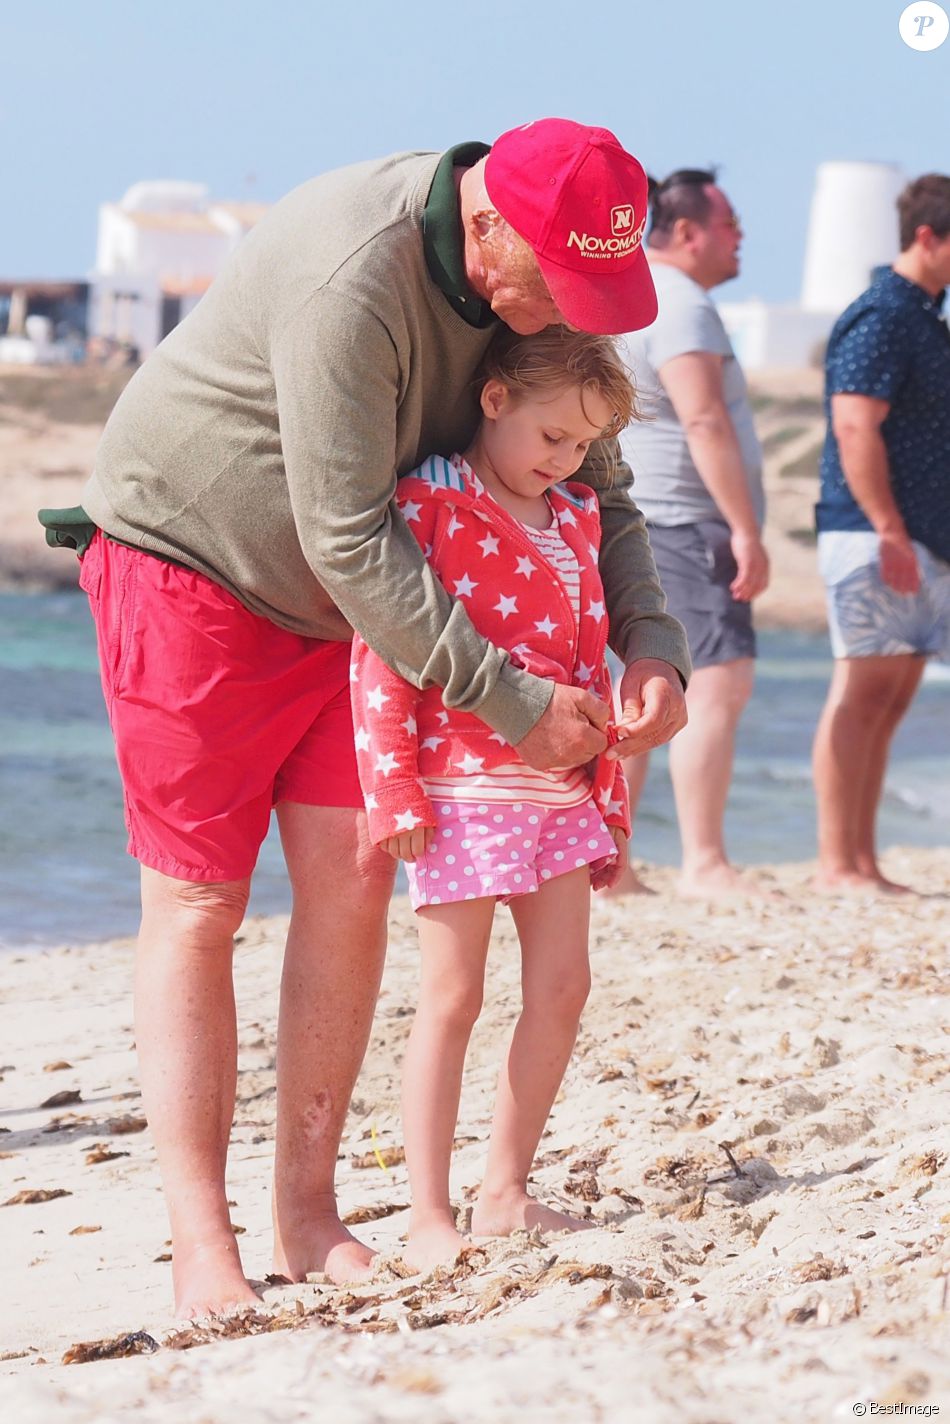 Exclusif - Andreas Nikolaus "Niki" Lauda en vacances en famille à Ibiza, le 13 juin 2015.